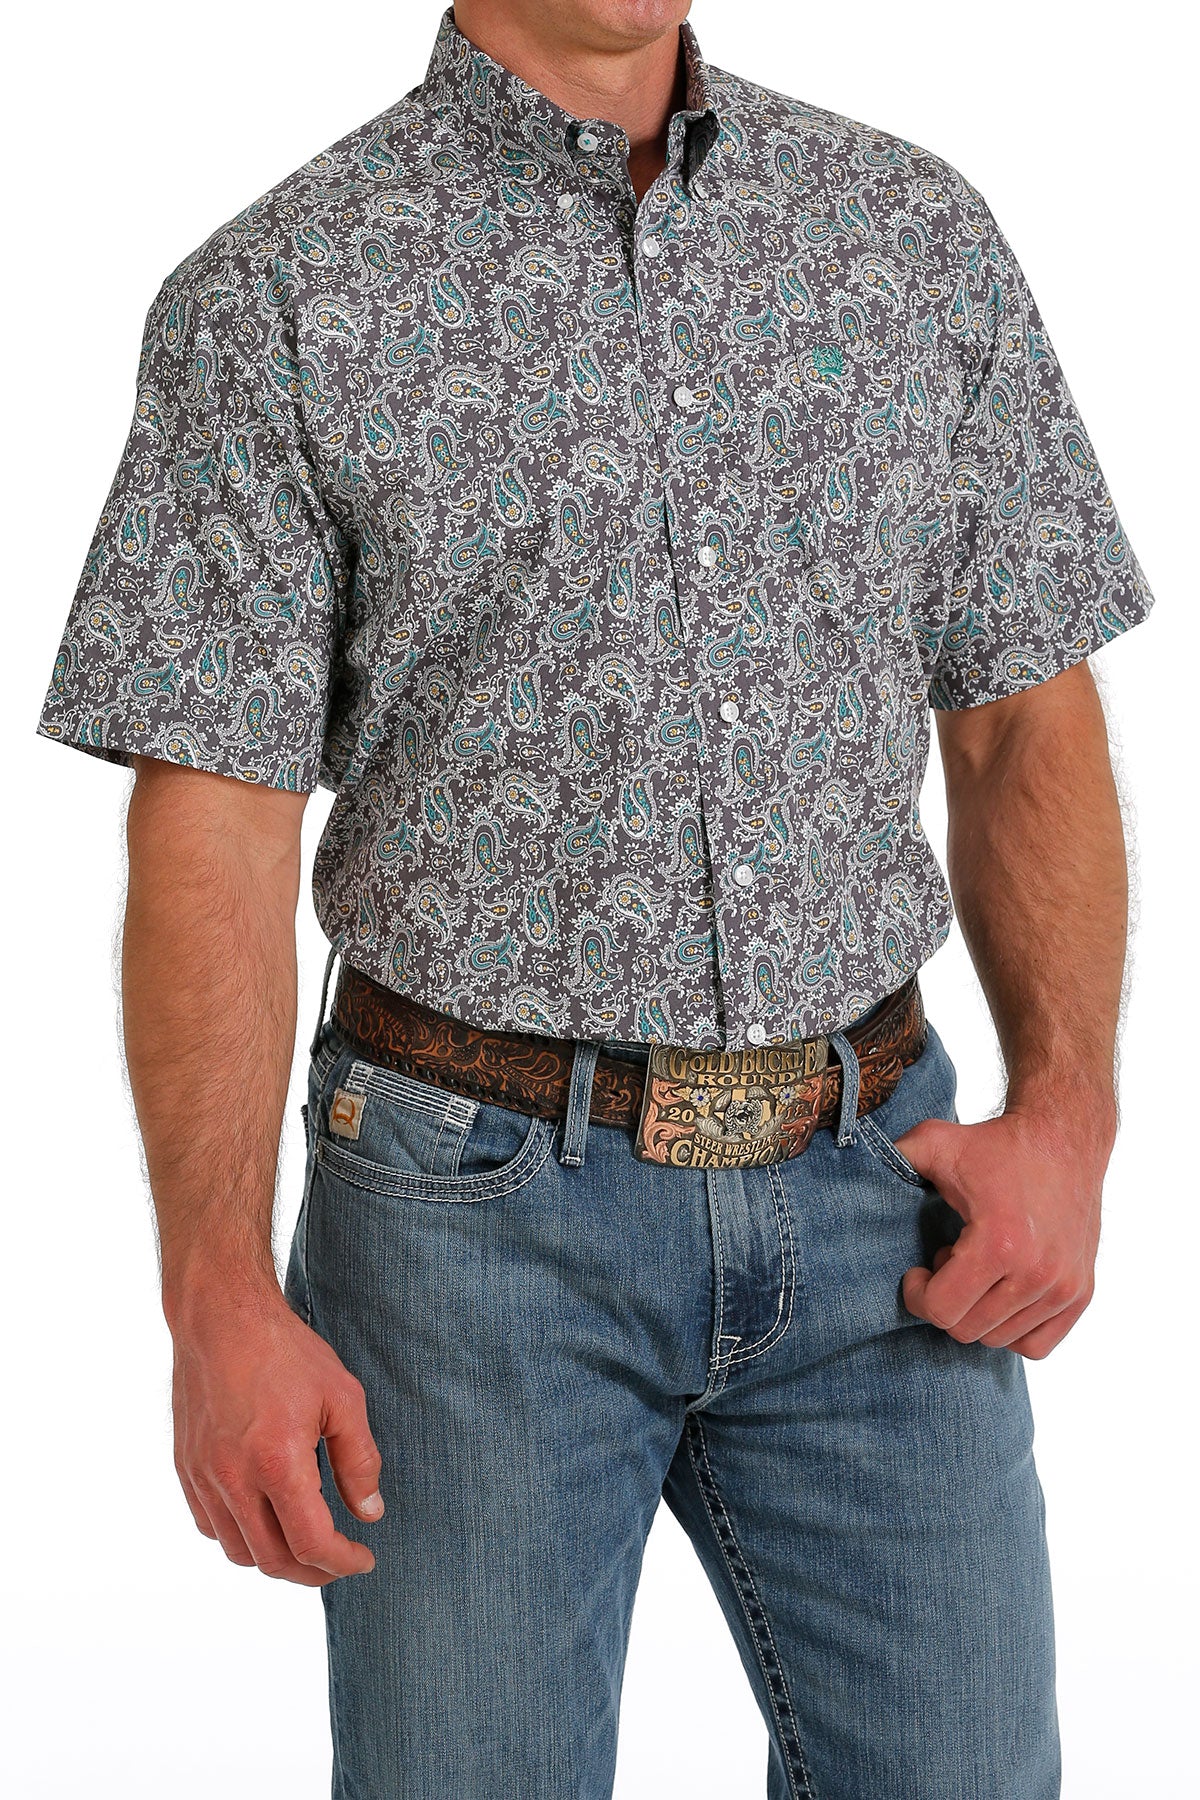 CINCH Men's Gray Paisley Short Sleeve Button-Down Western Shirt